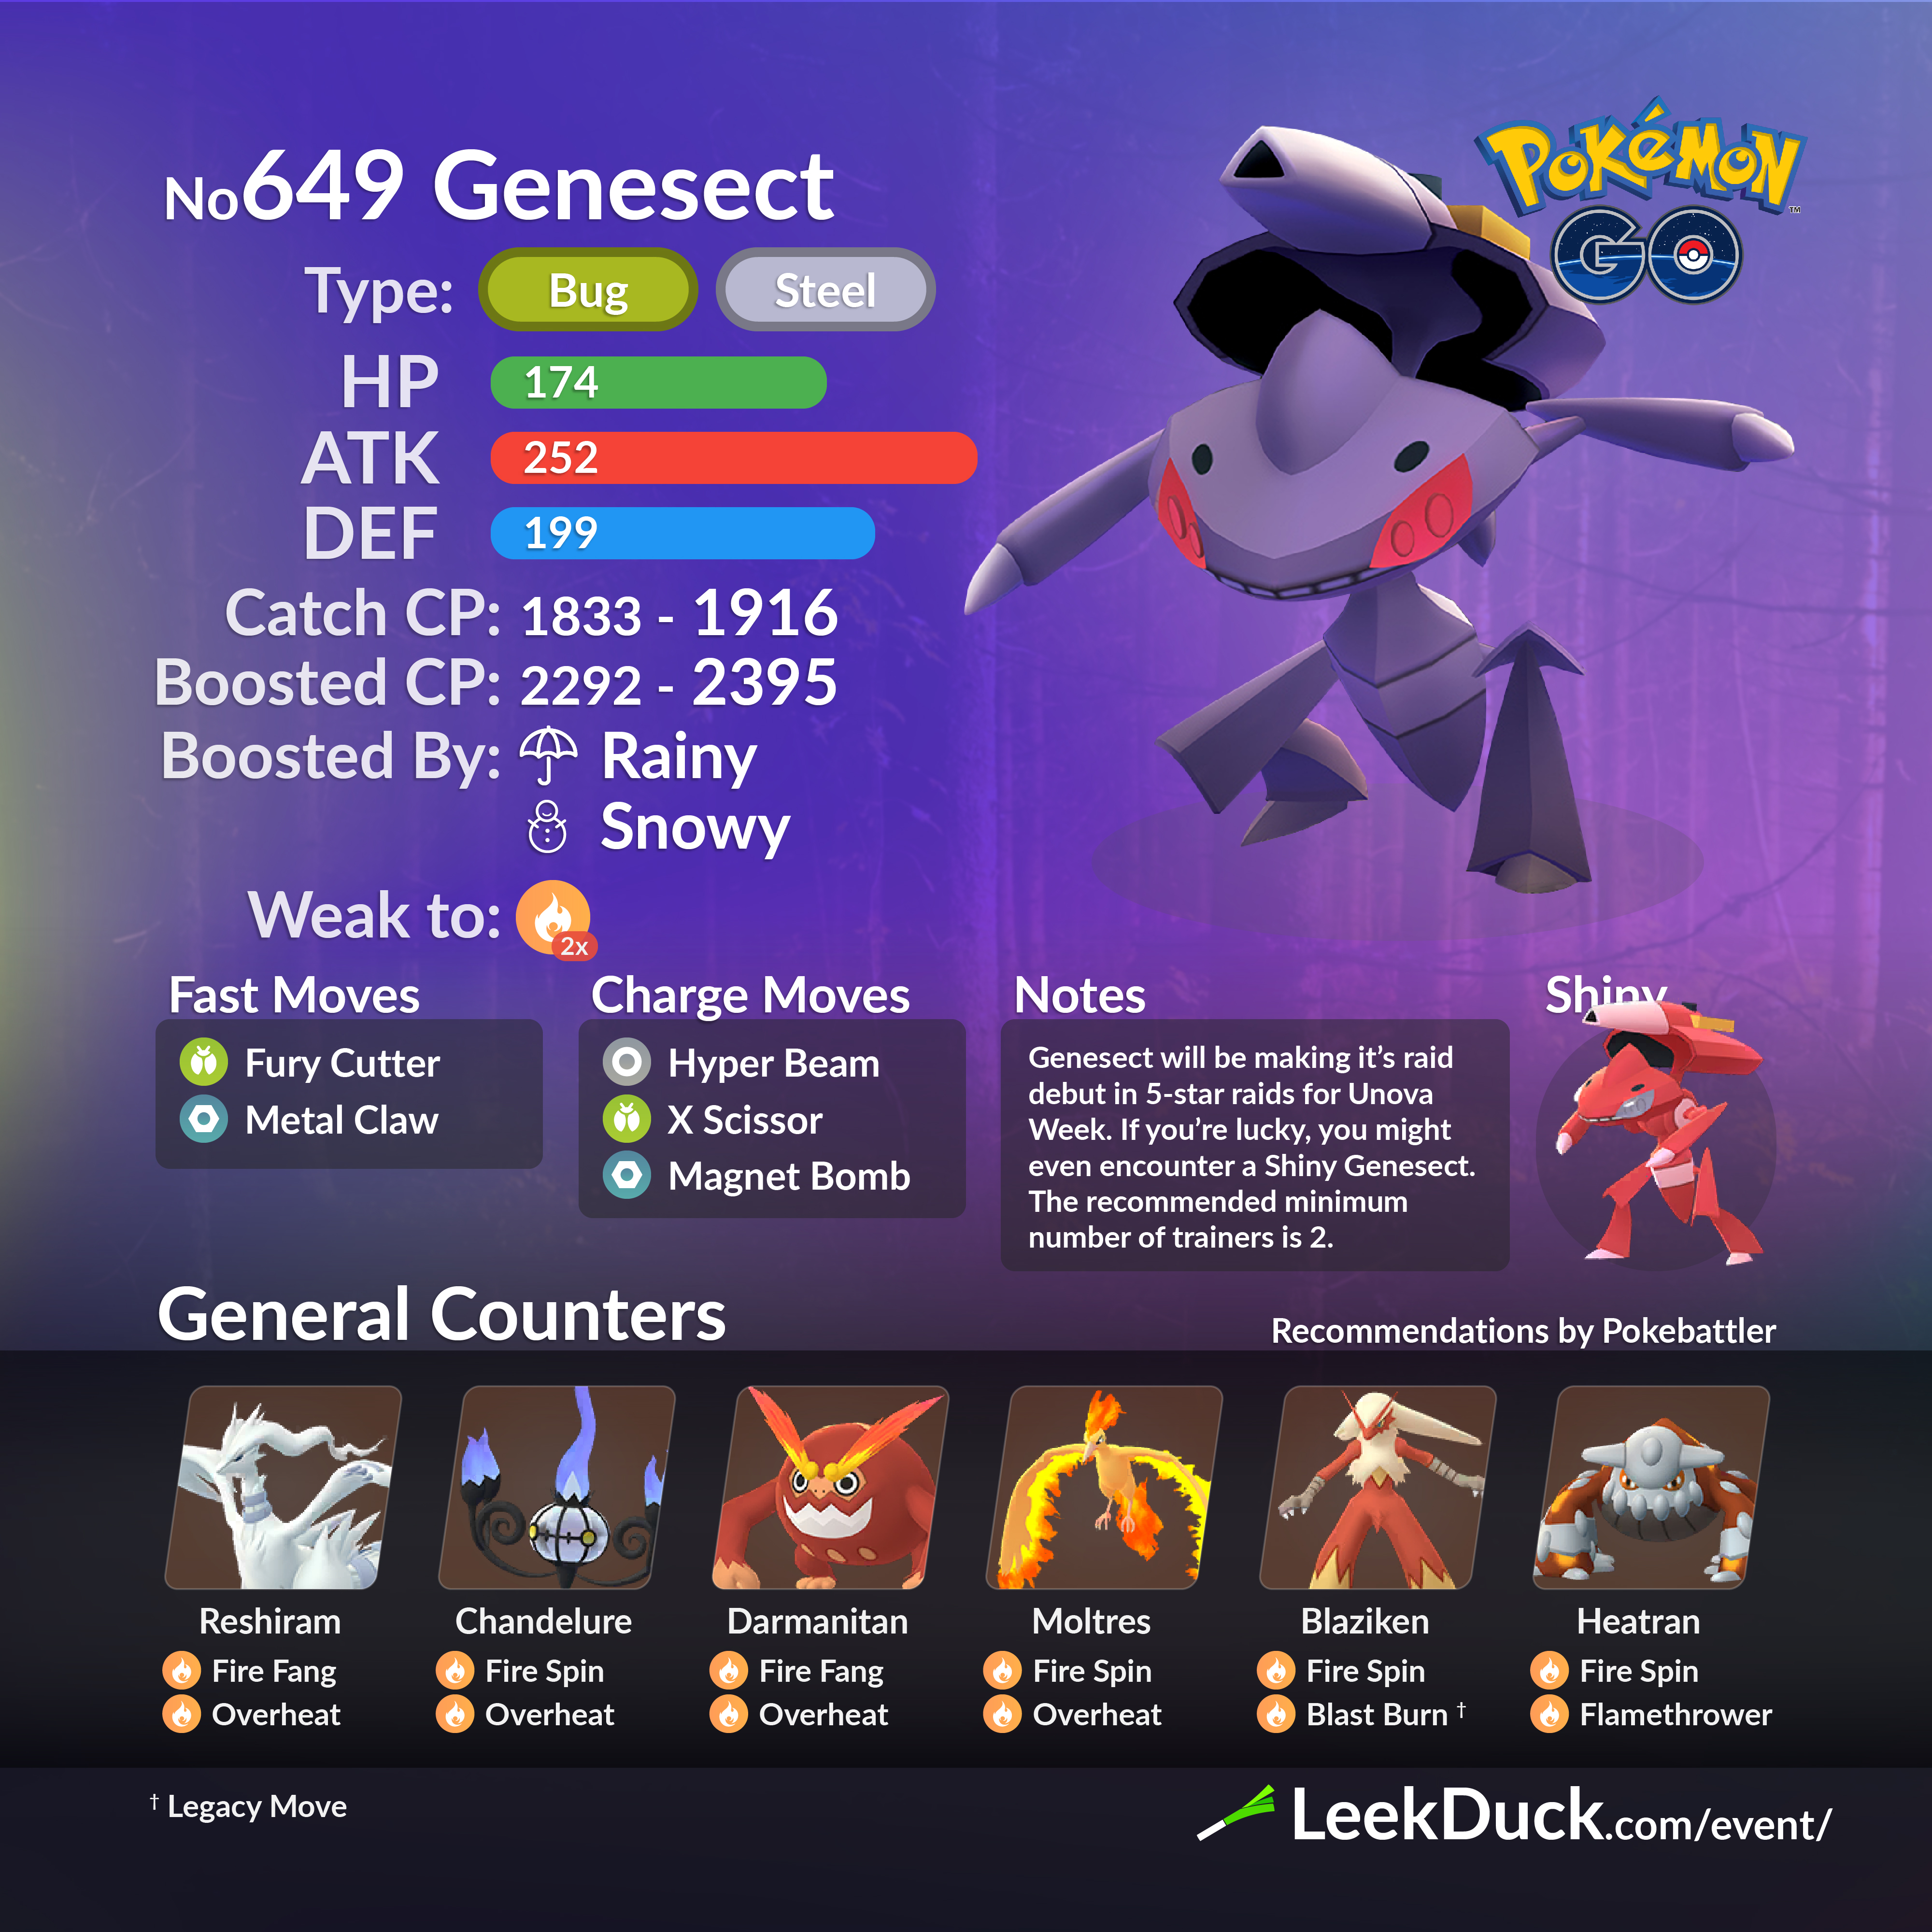 Pokémon of the Week - Genesect